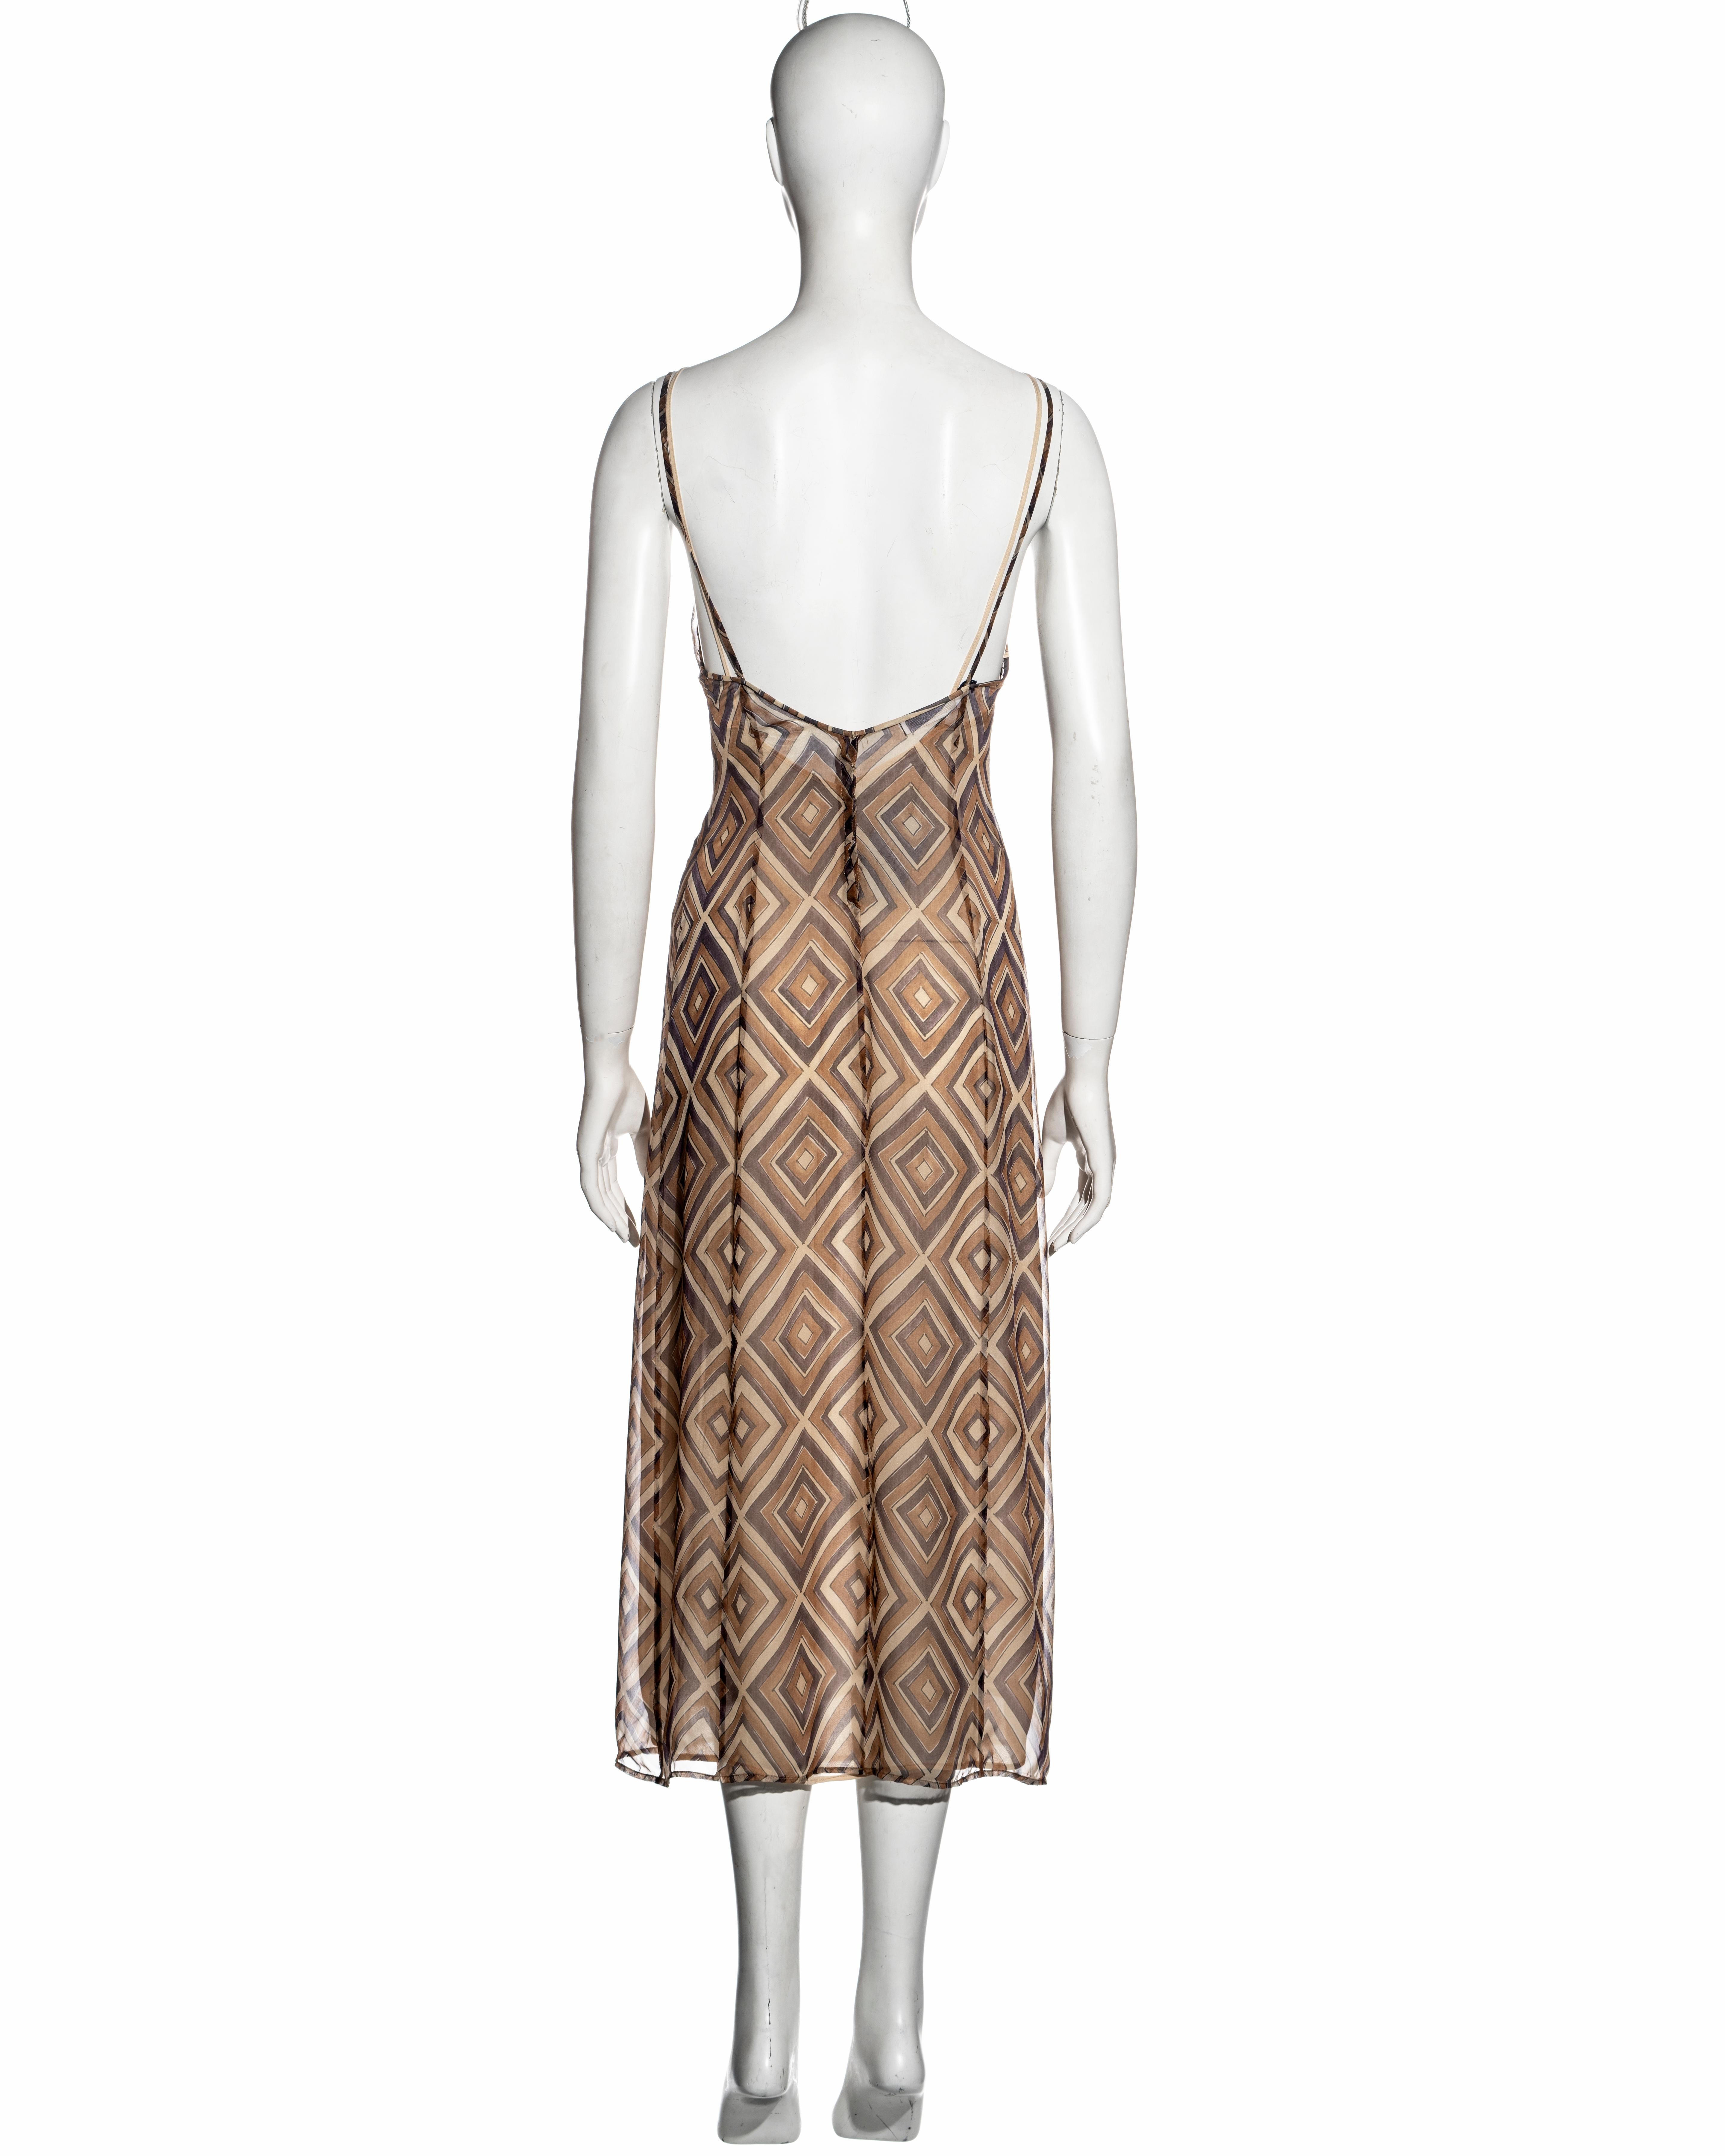 Prada by Miuccia Prada brown silk chiffon slip dress, fw 1996 For Sale 4